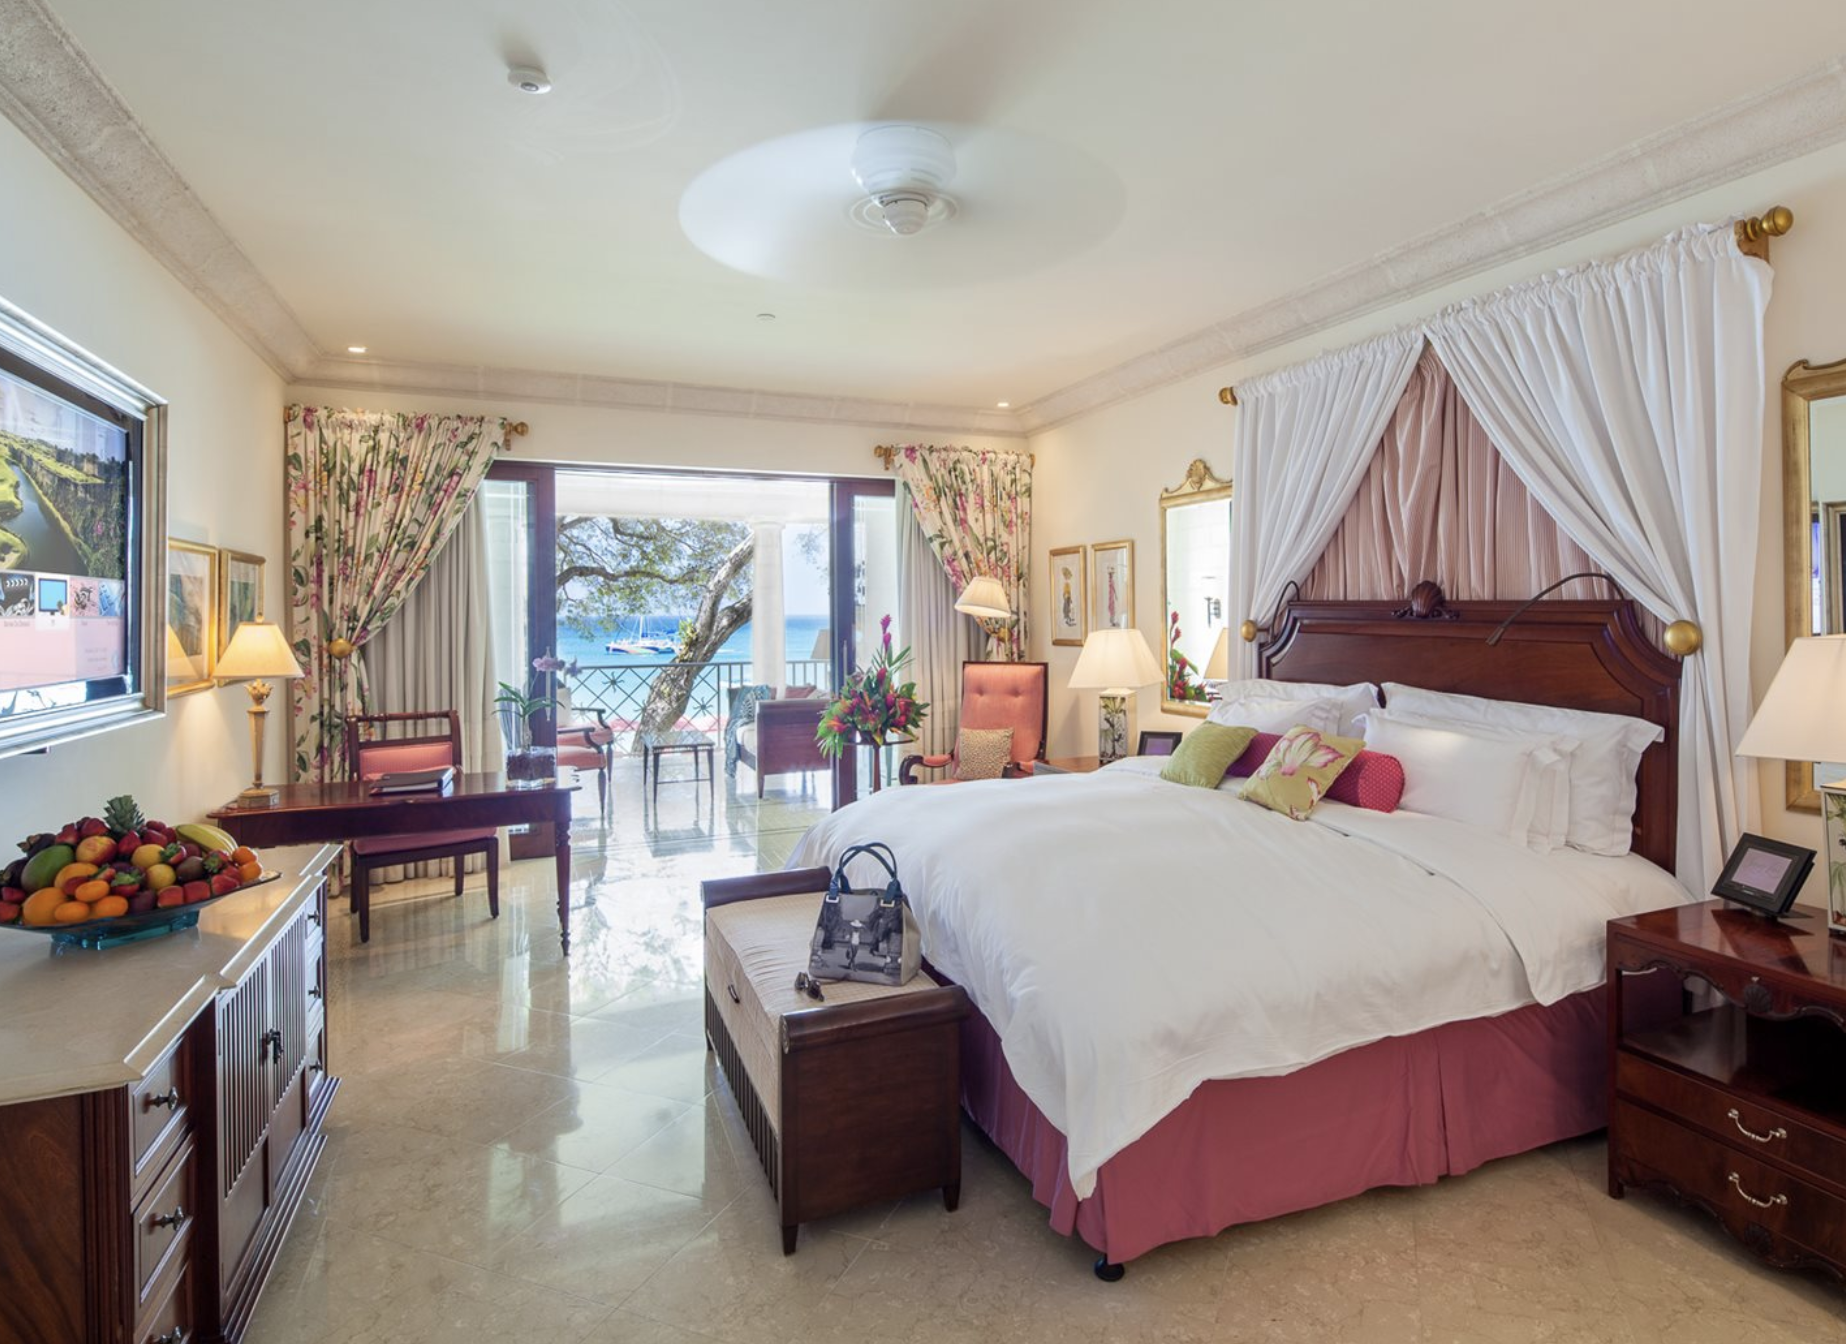 Best Hotels in Barbados